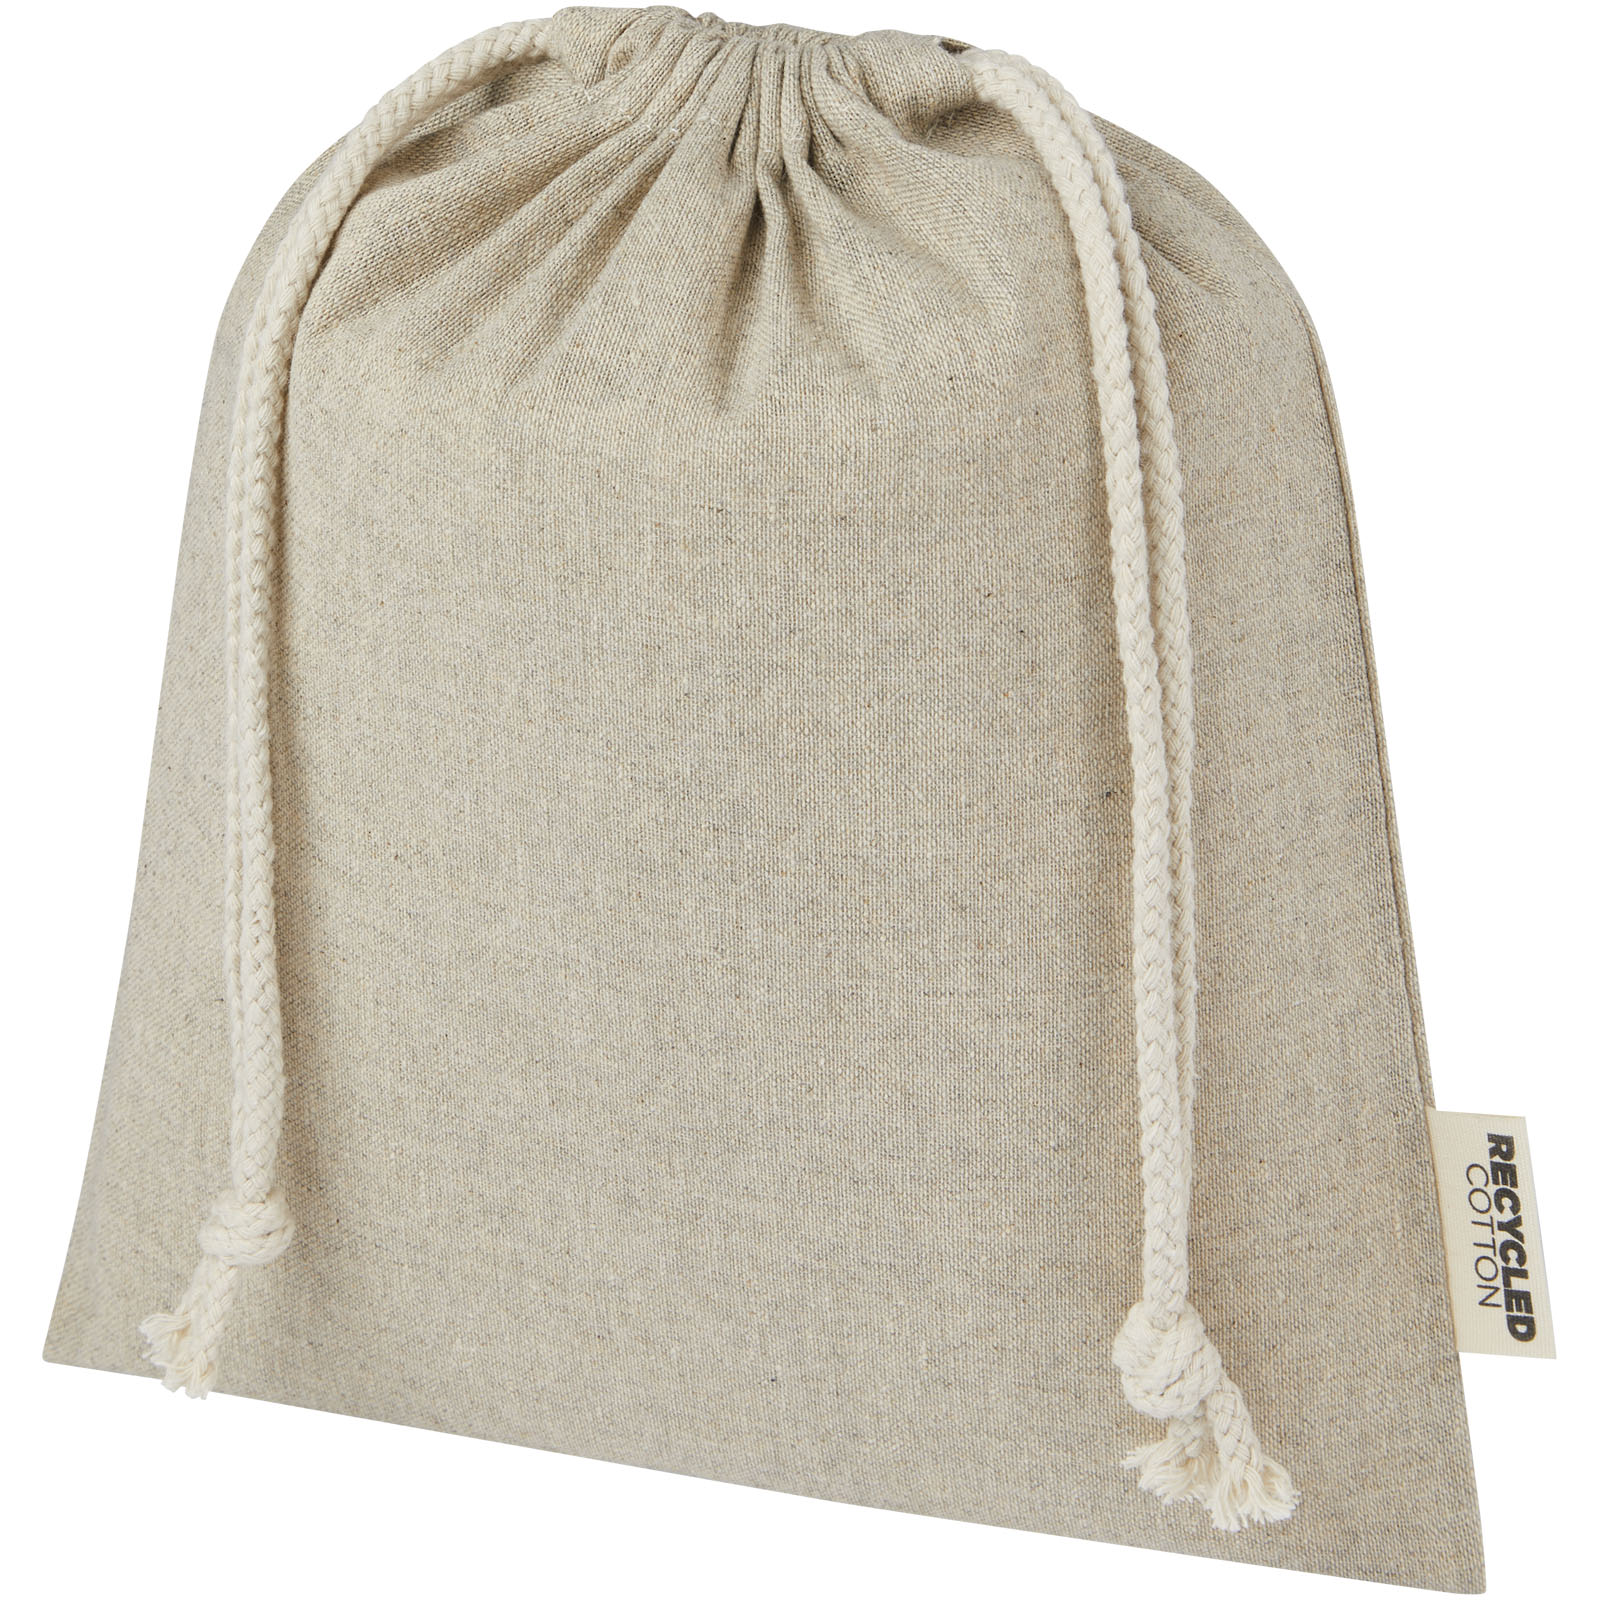 Sacs en coton - Sac cadeau moyen Pheebs en coton recyclé GRS 150 g/m² de 1,5 L